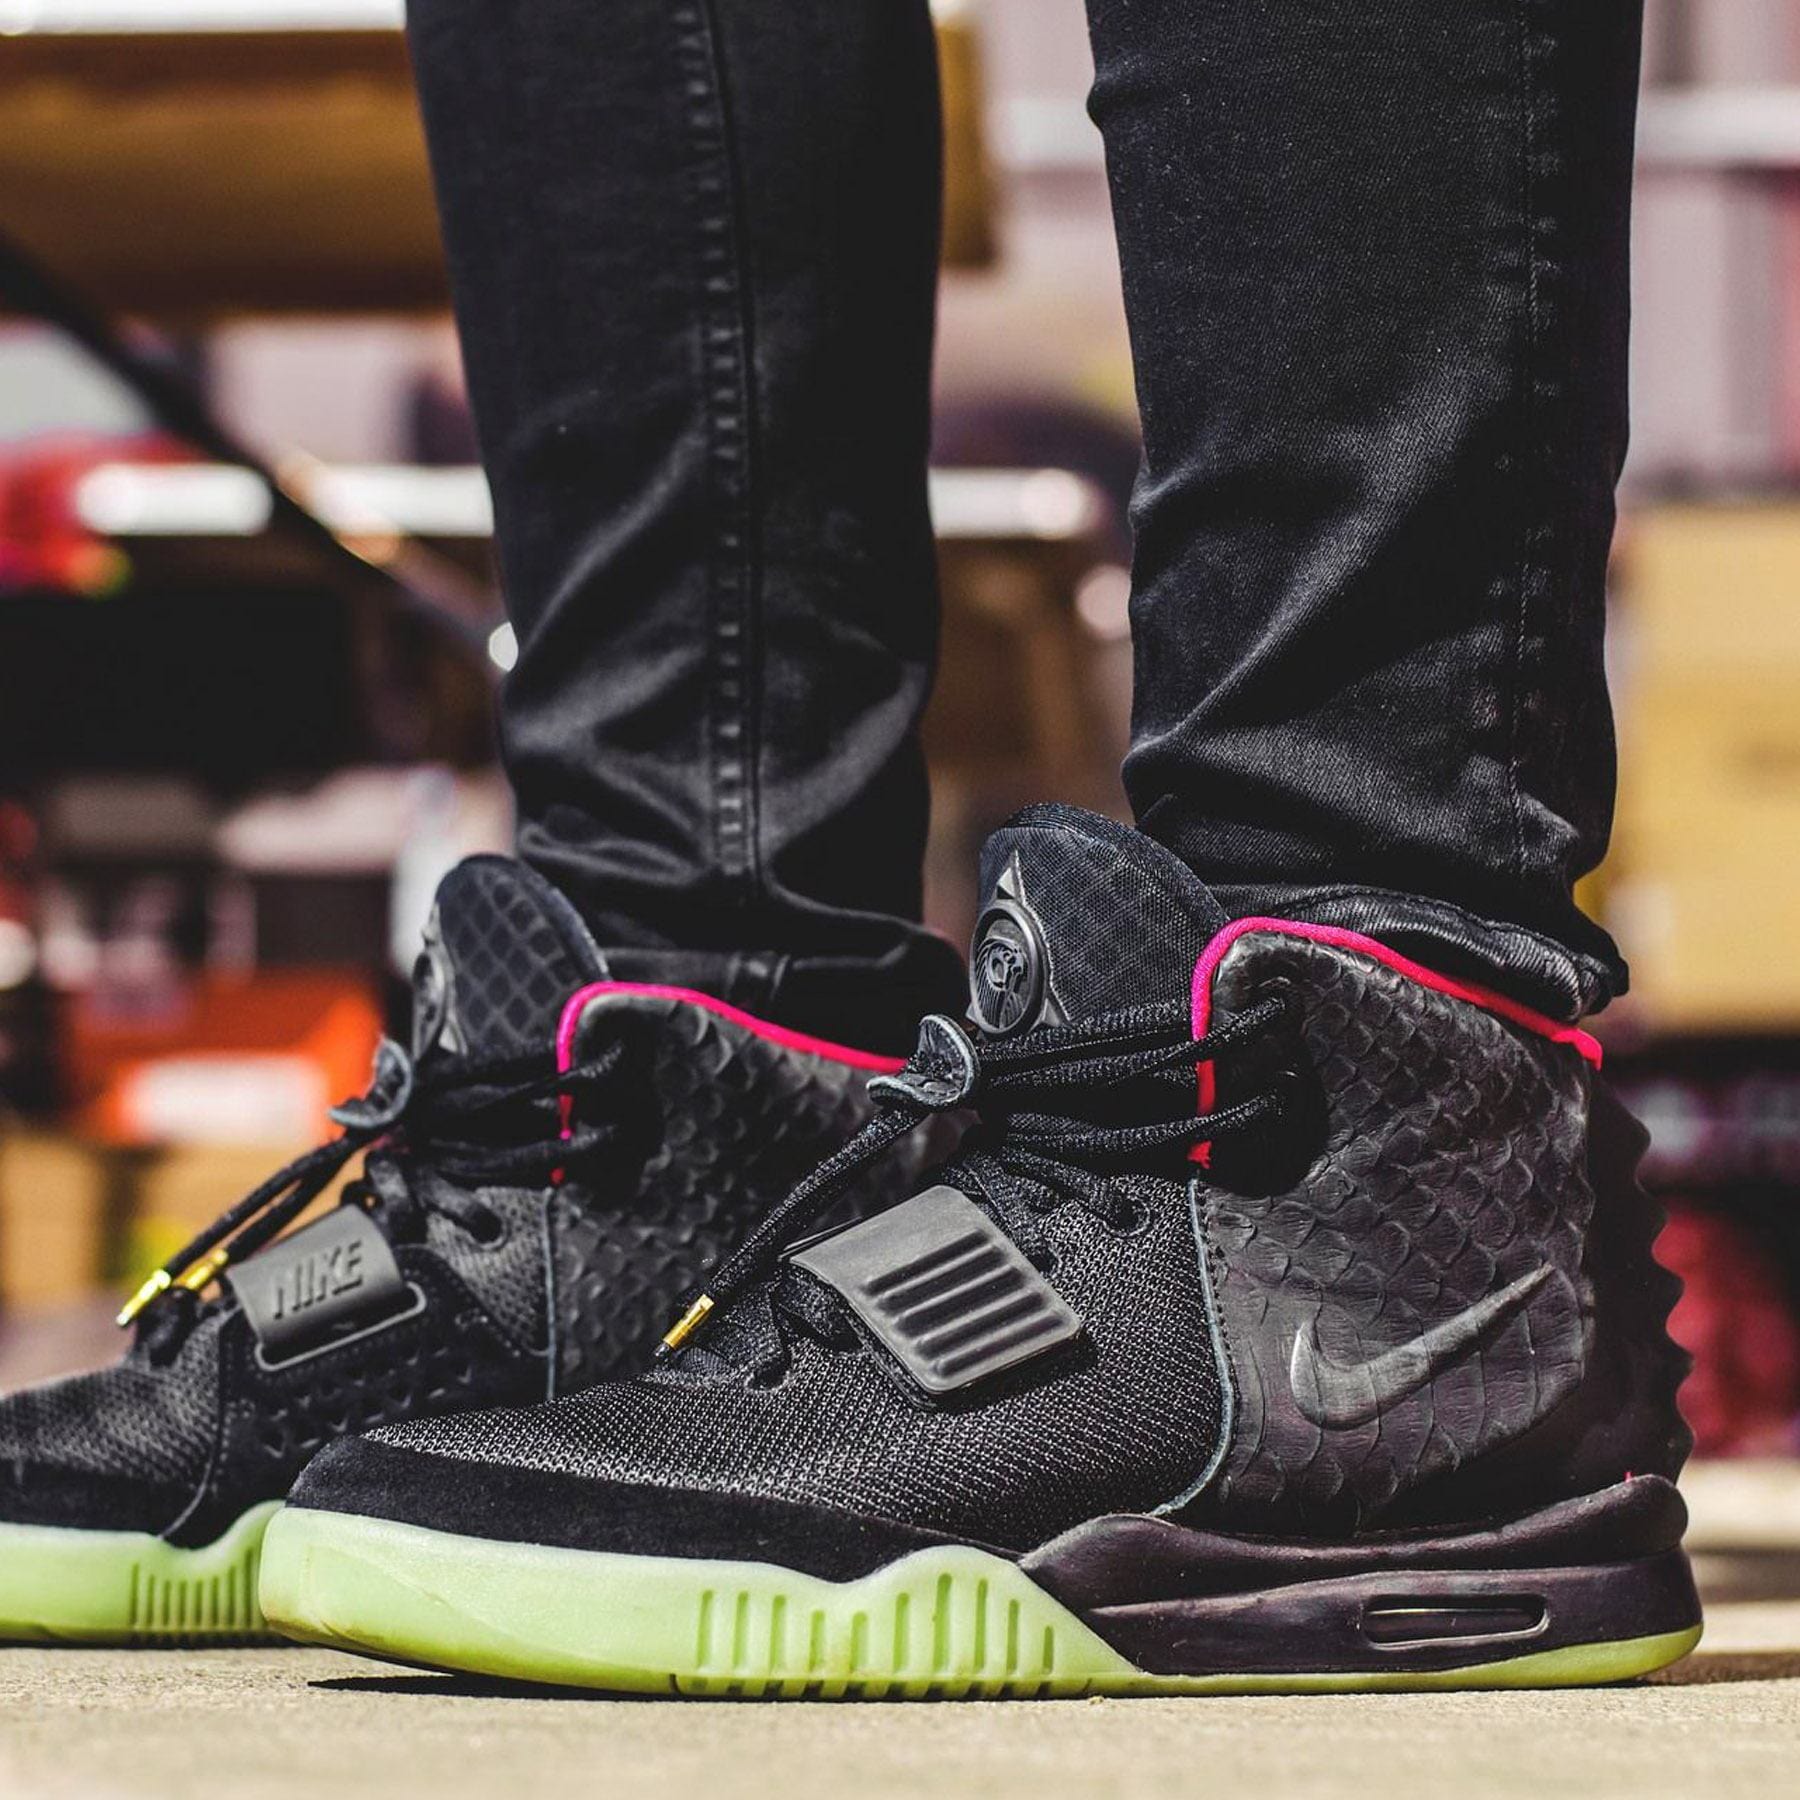 Nike Air Yeezy 2 > Adidas Yeezy's IMO : r/Sneakers